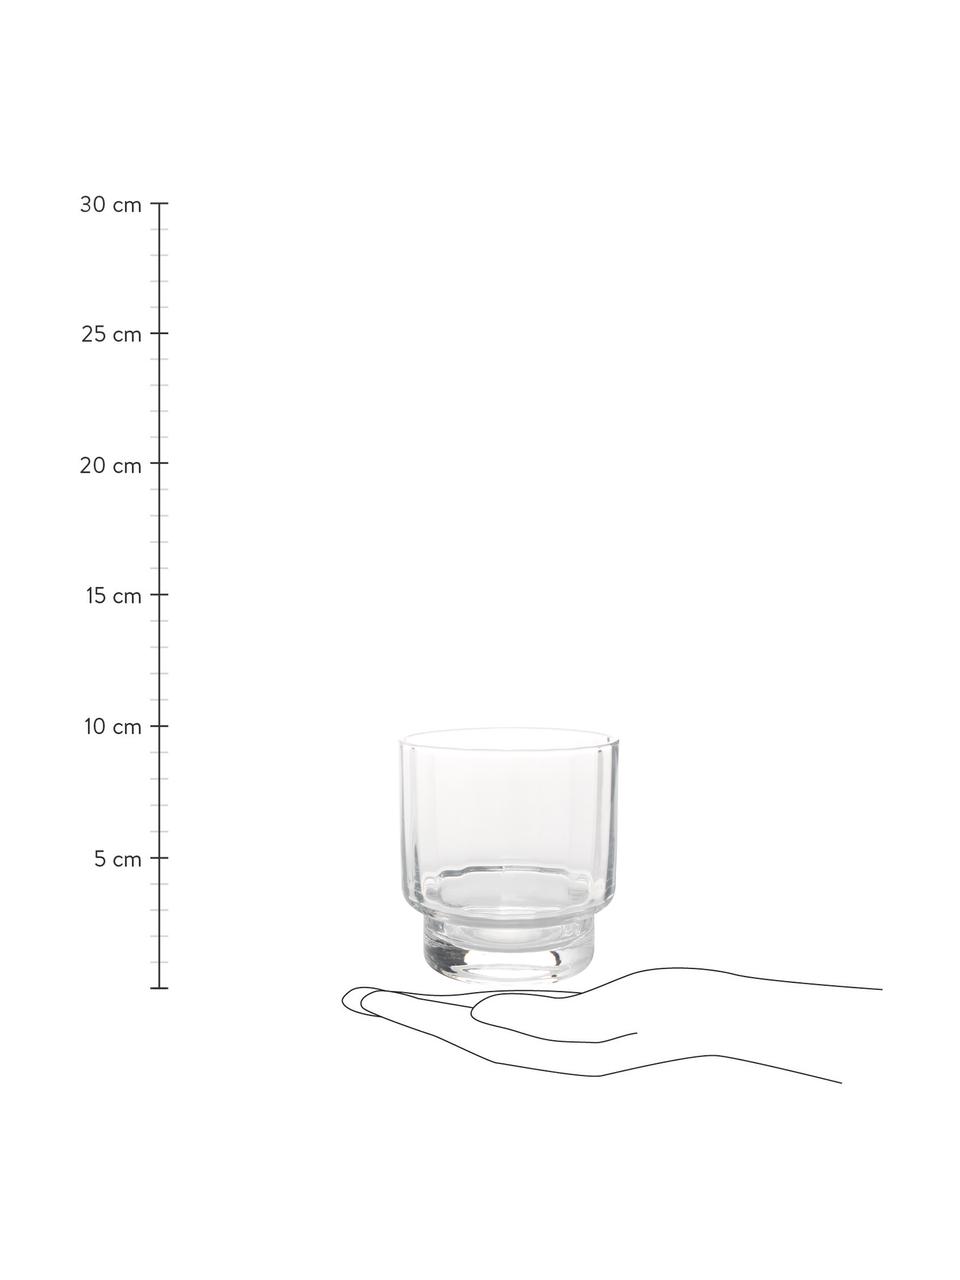 Waterglas Vista met groefreliëf, Glas, Transparant, Ø 8 x H 8 cm, 300 ml